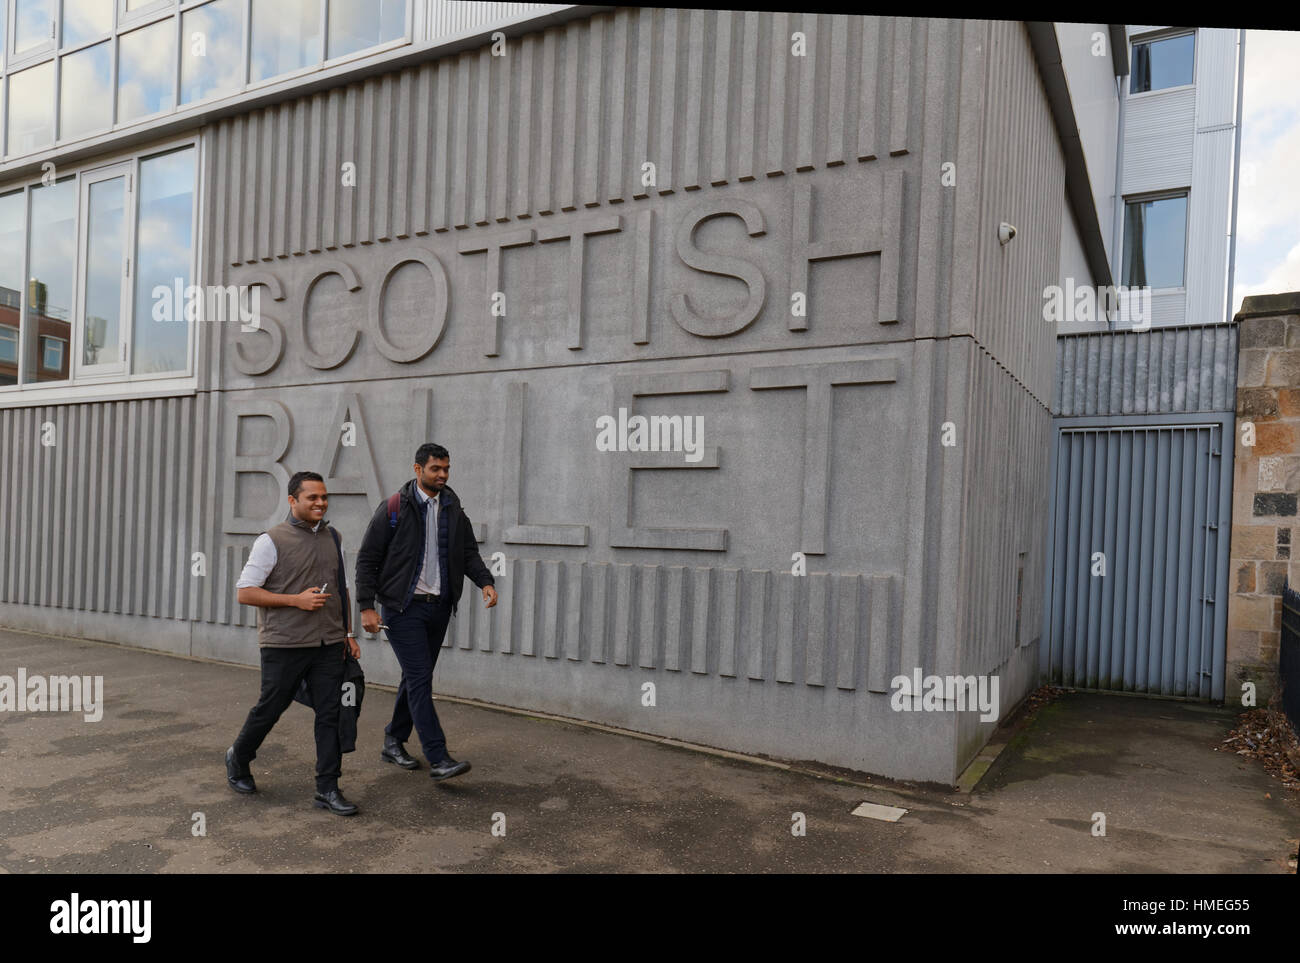 Students Scotland scottish ballet sign on street in the UK everyday scene Stock Photo